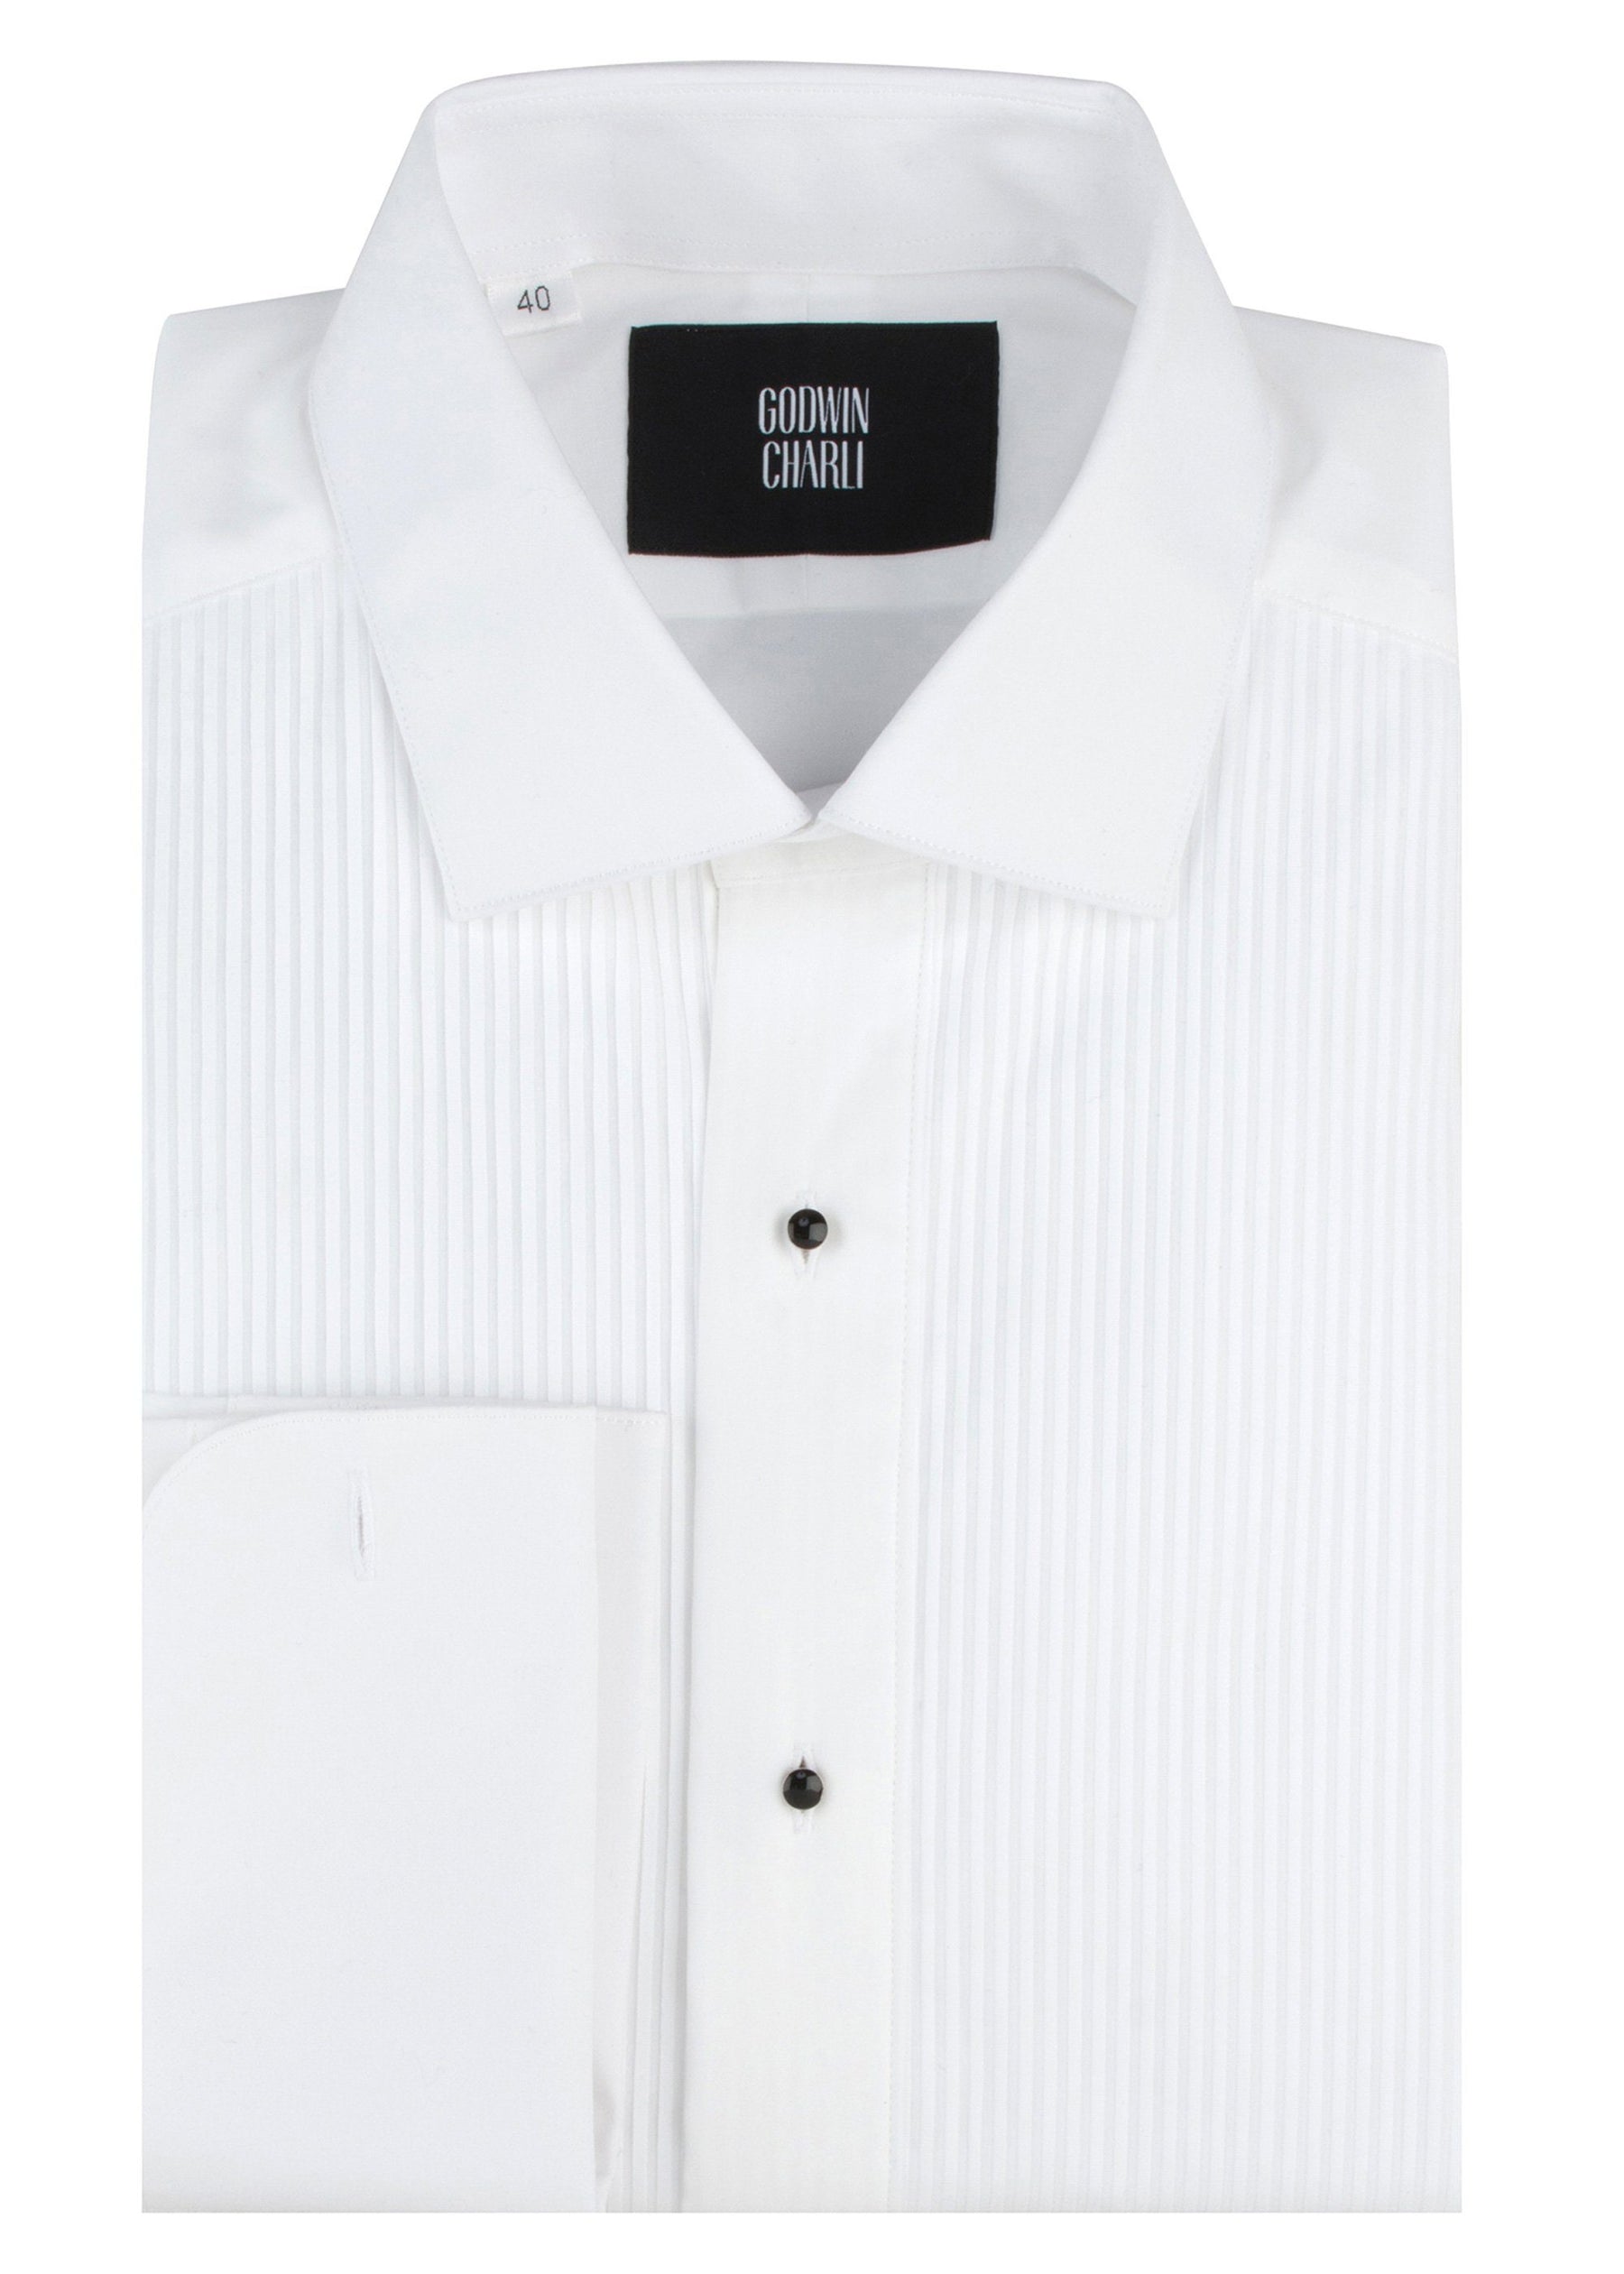 Bastien Dinner Shirt - White Poplin Cotton (Pleated Bib Front)